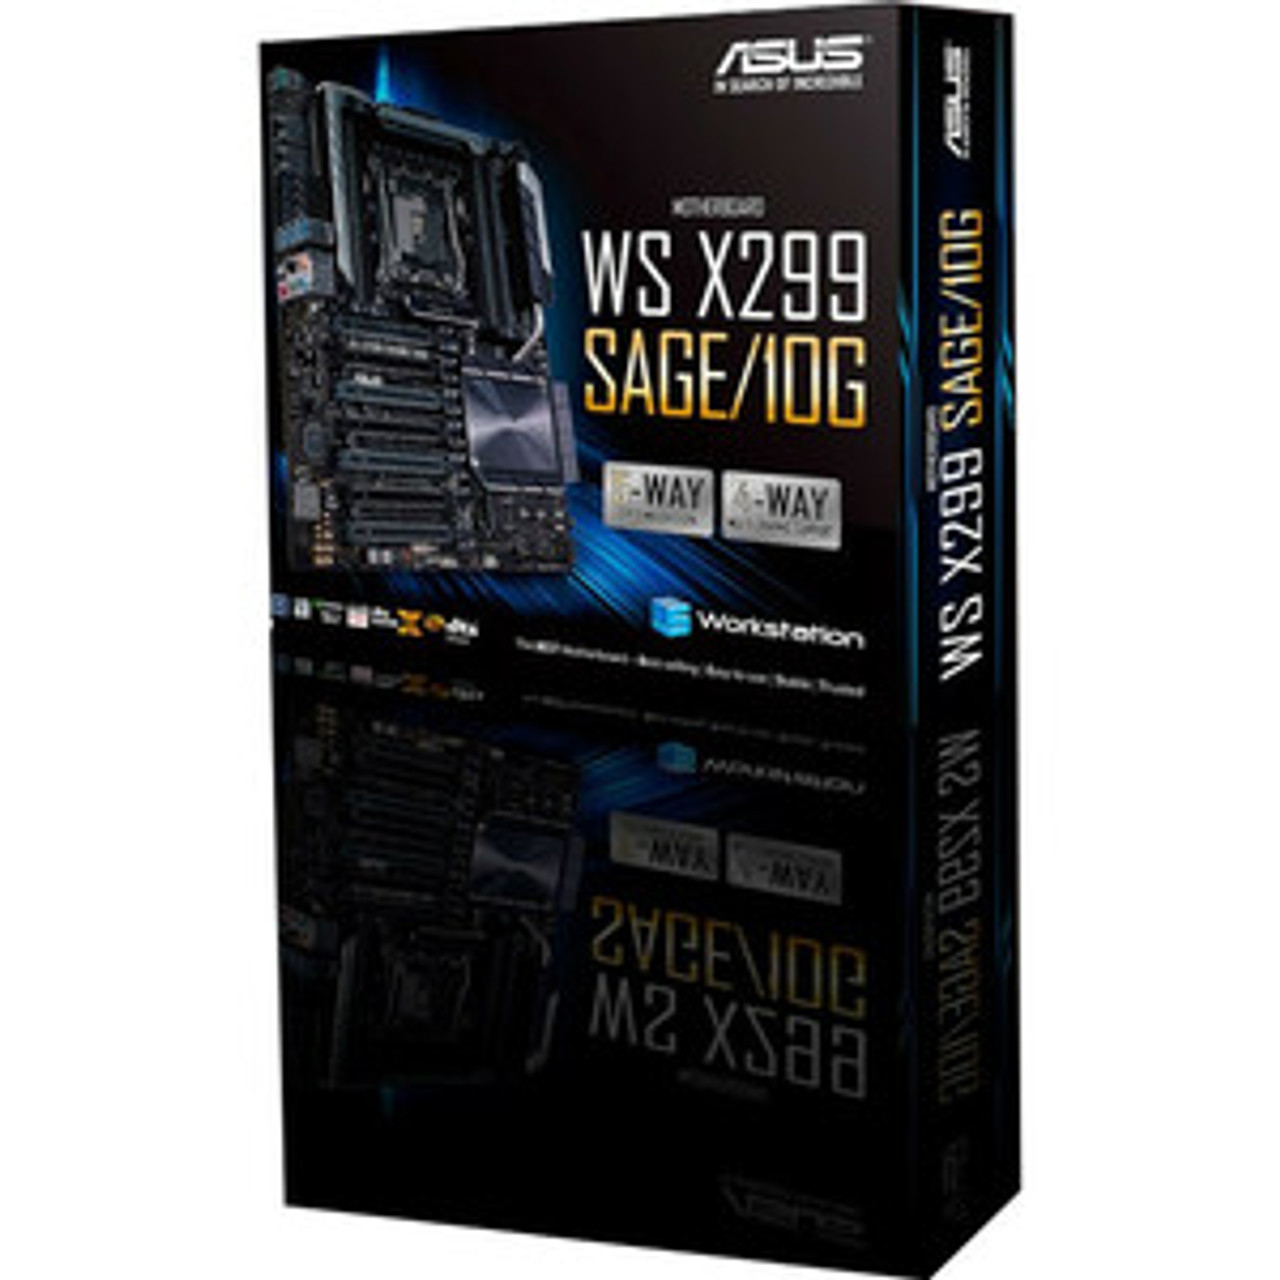 Asus WS X299 SAGE/10G Workstation Motherboard - Intel X299 Chipset - Socket R4 LGA-2066 - Intel Optane Memory Ready - SSI CEB - 128 GB DDR4 SDRAM Maximum RAM - UDIMM, DIMM - 8 x Memory Slots - WS X299 SAGE/10G